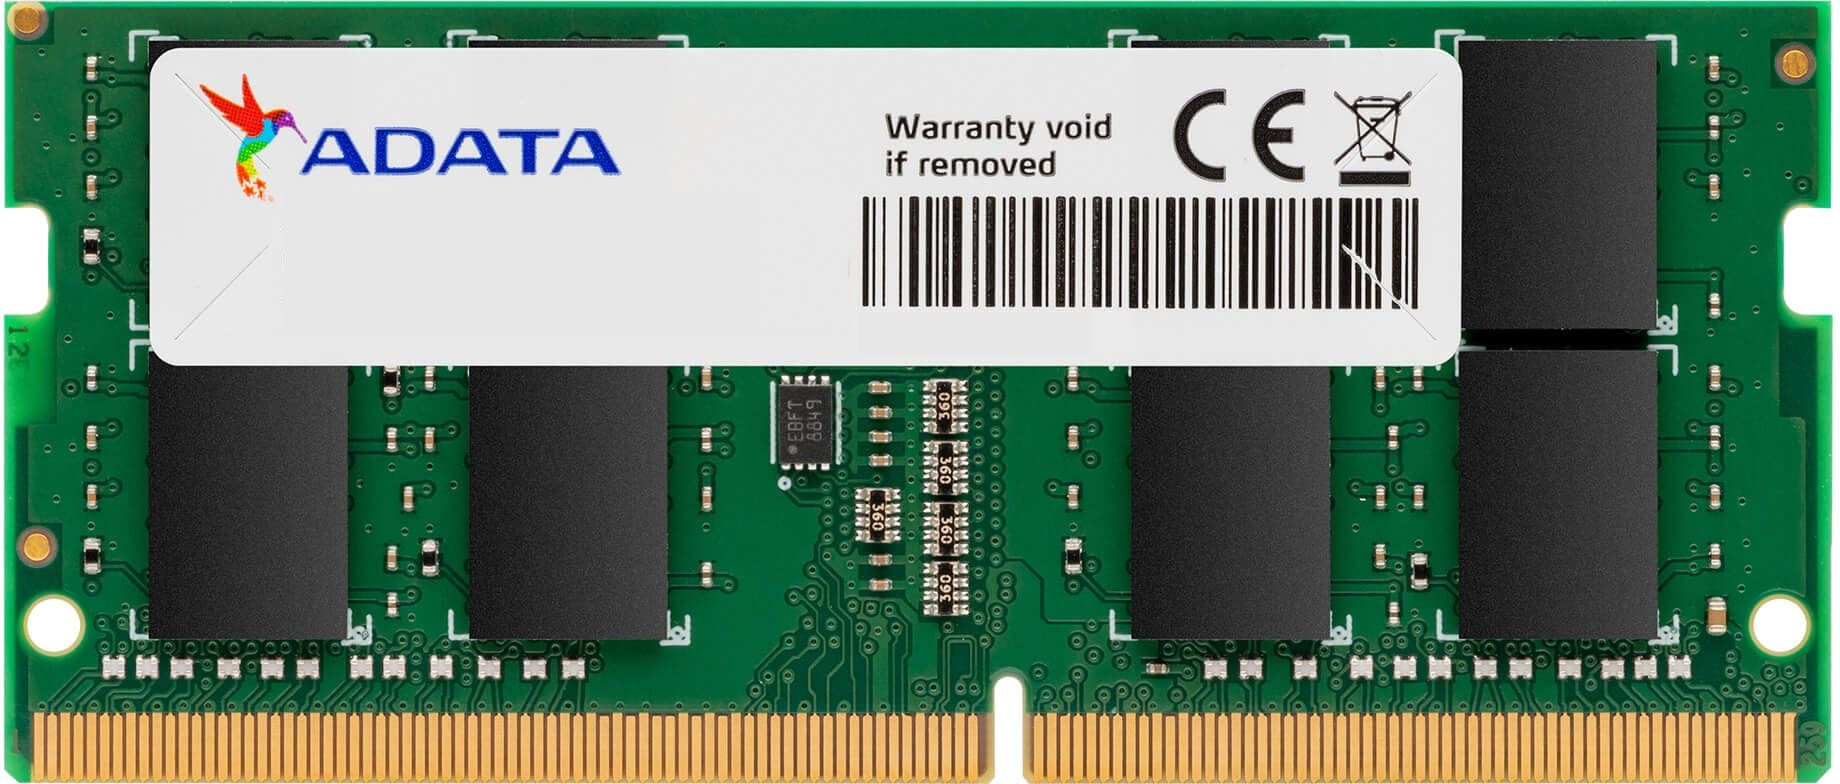 Модуль памяти A-Data Premier AD4S266616G19-RGN DDR4 -  16ГБ 2666, SO-DIMM,  Ret